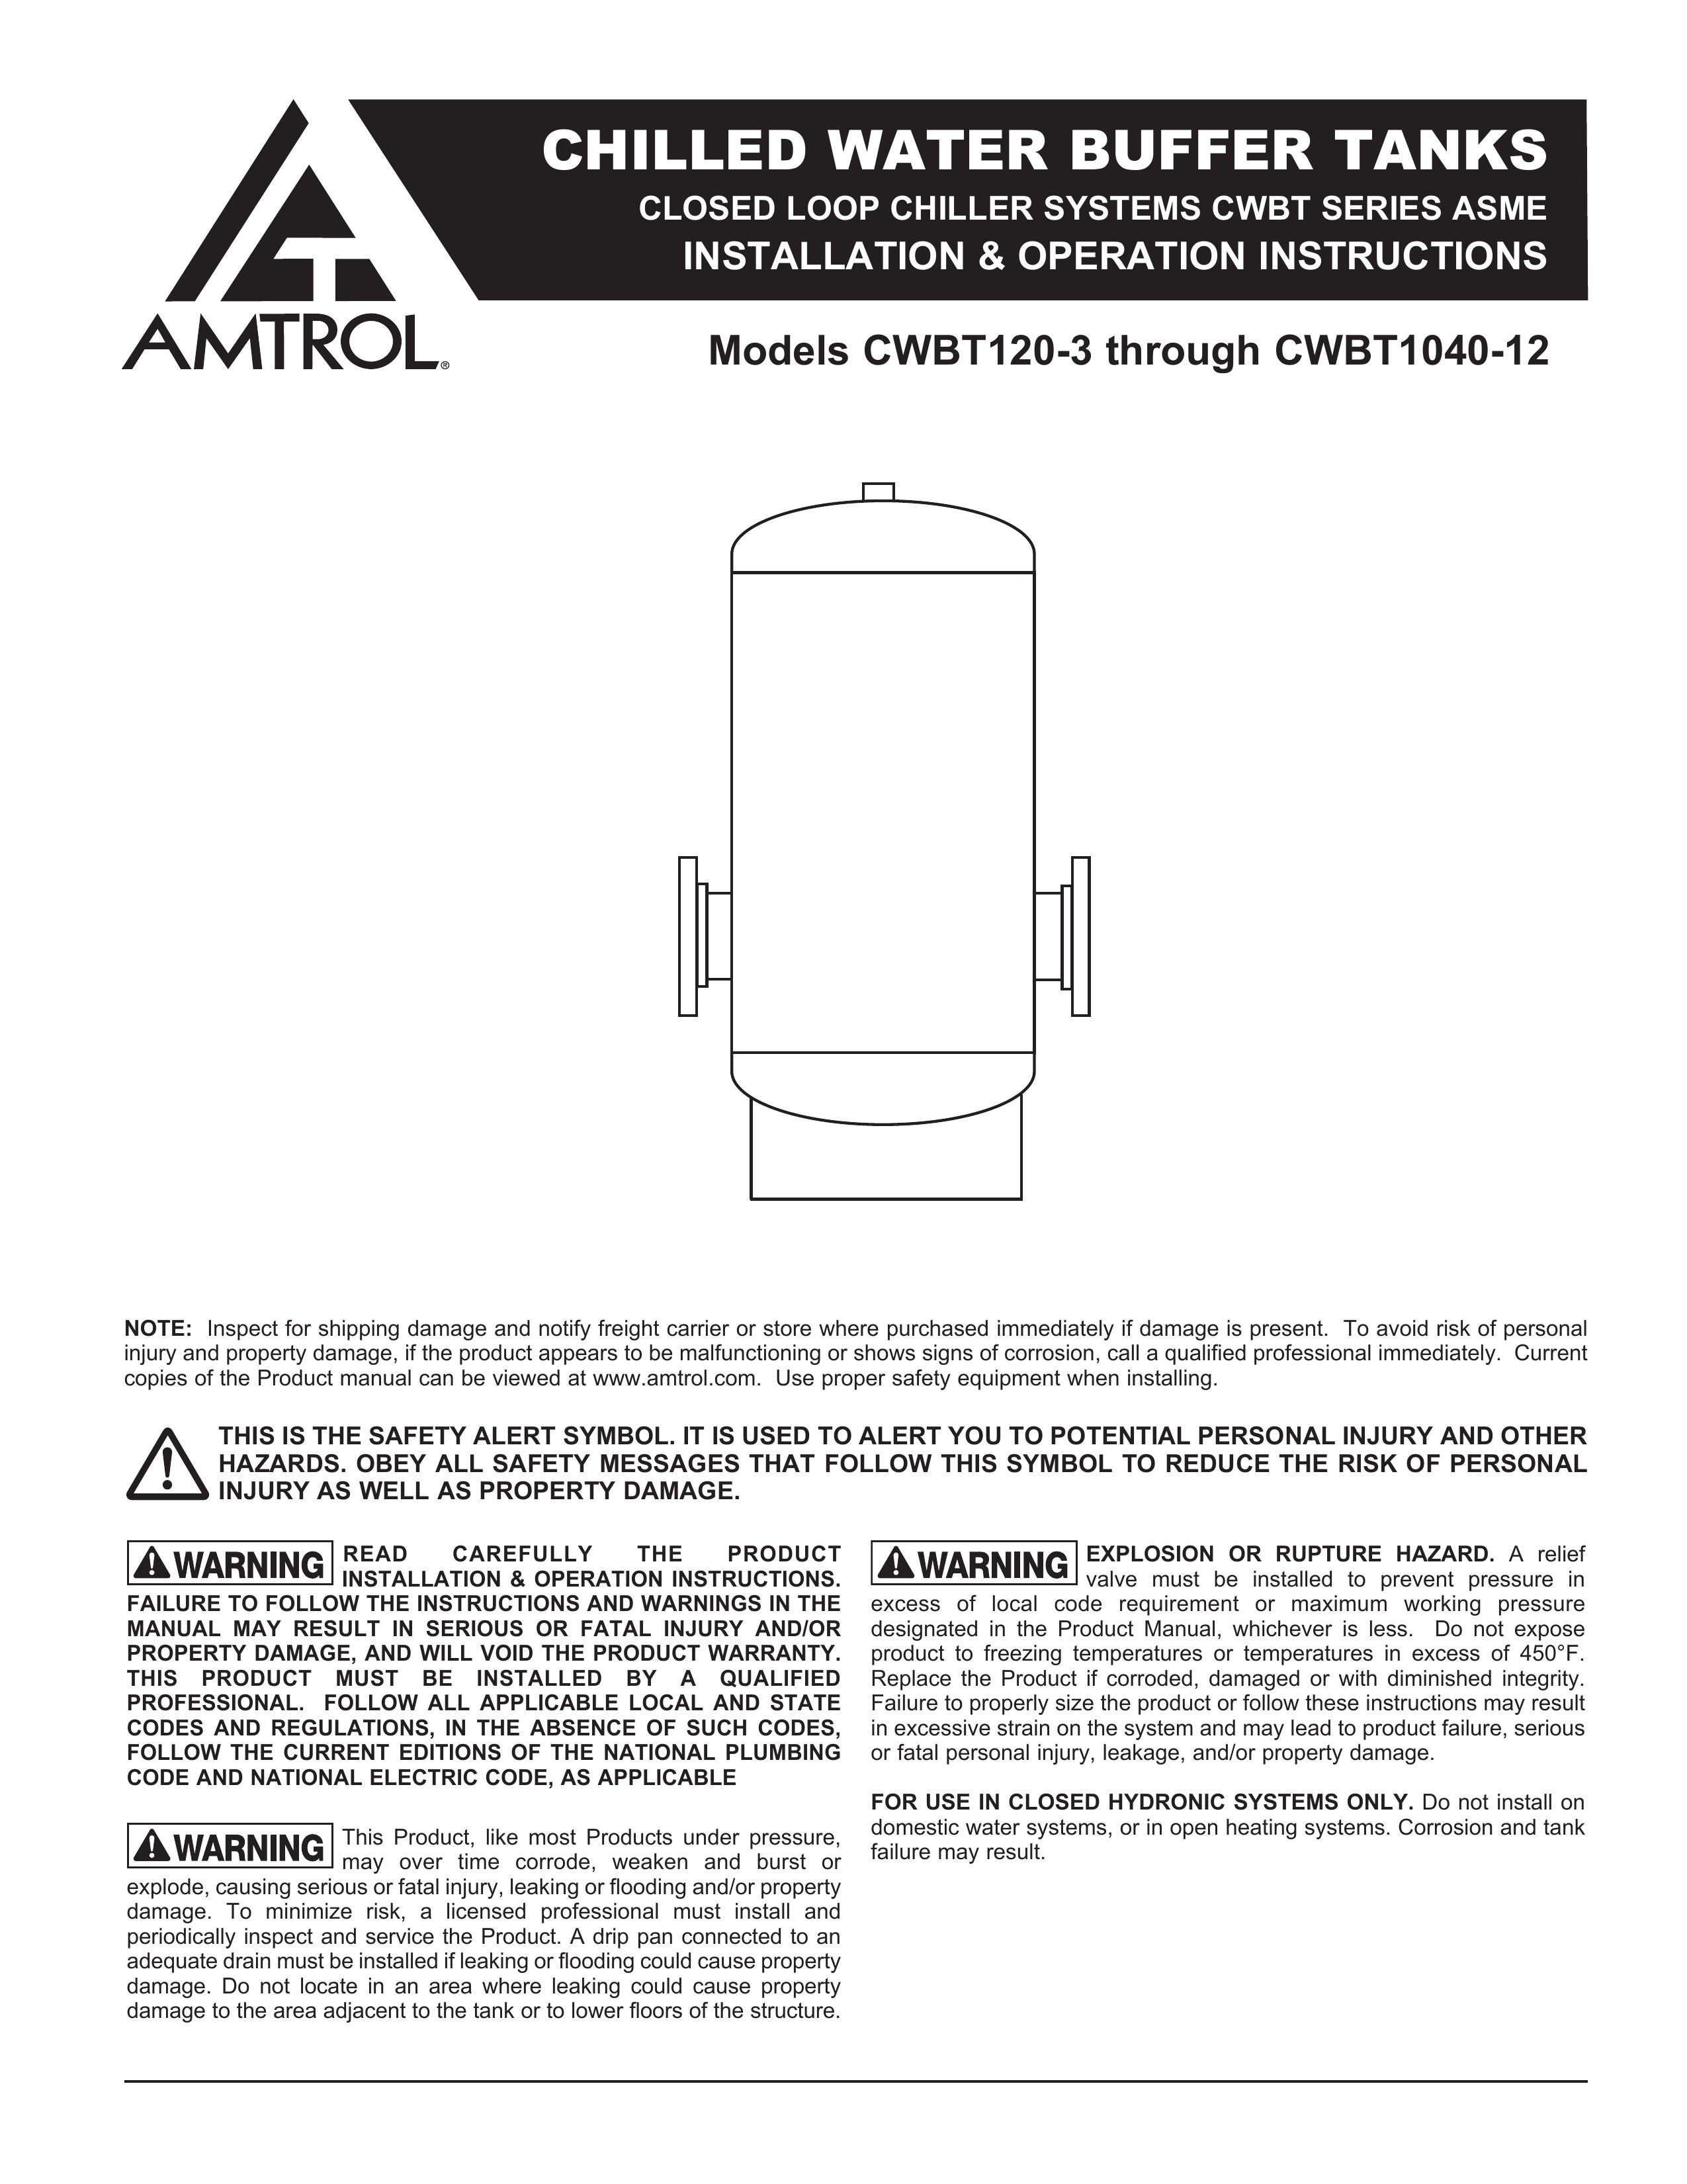 Amtrol CWBT120-3 Marine Sanitation System User Manual